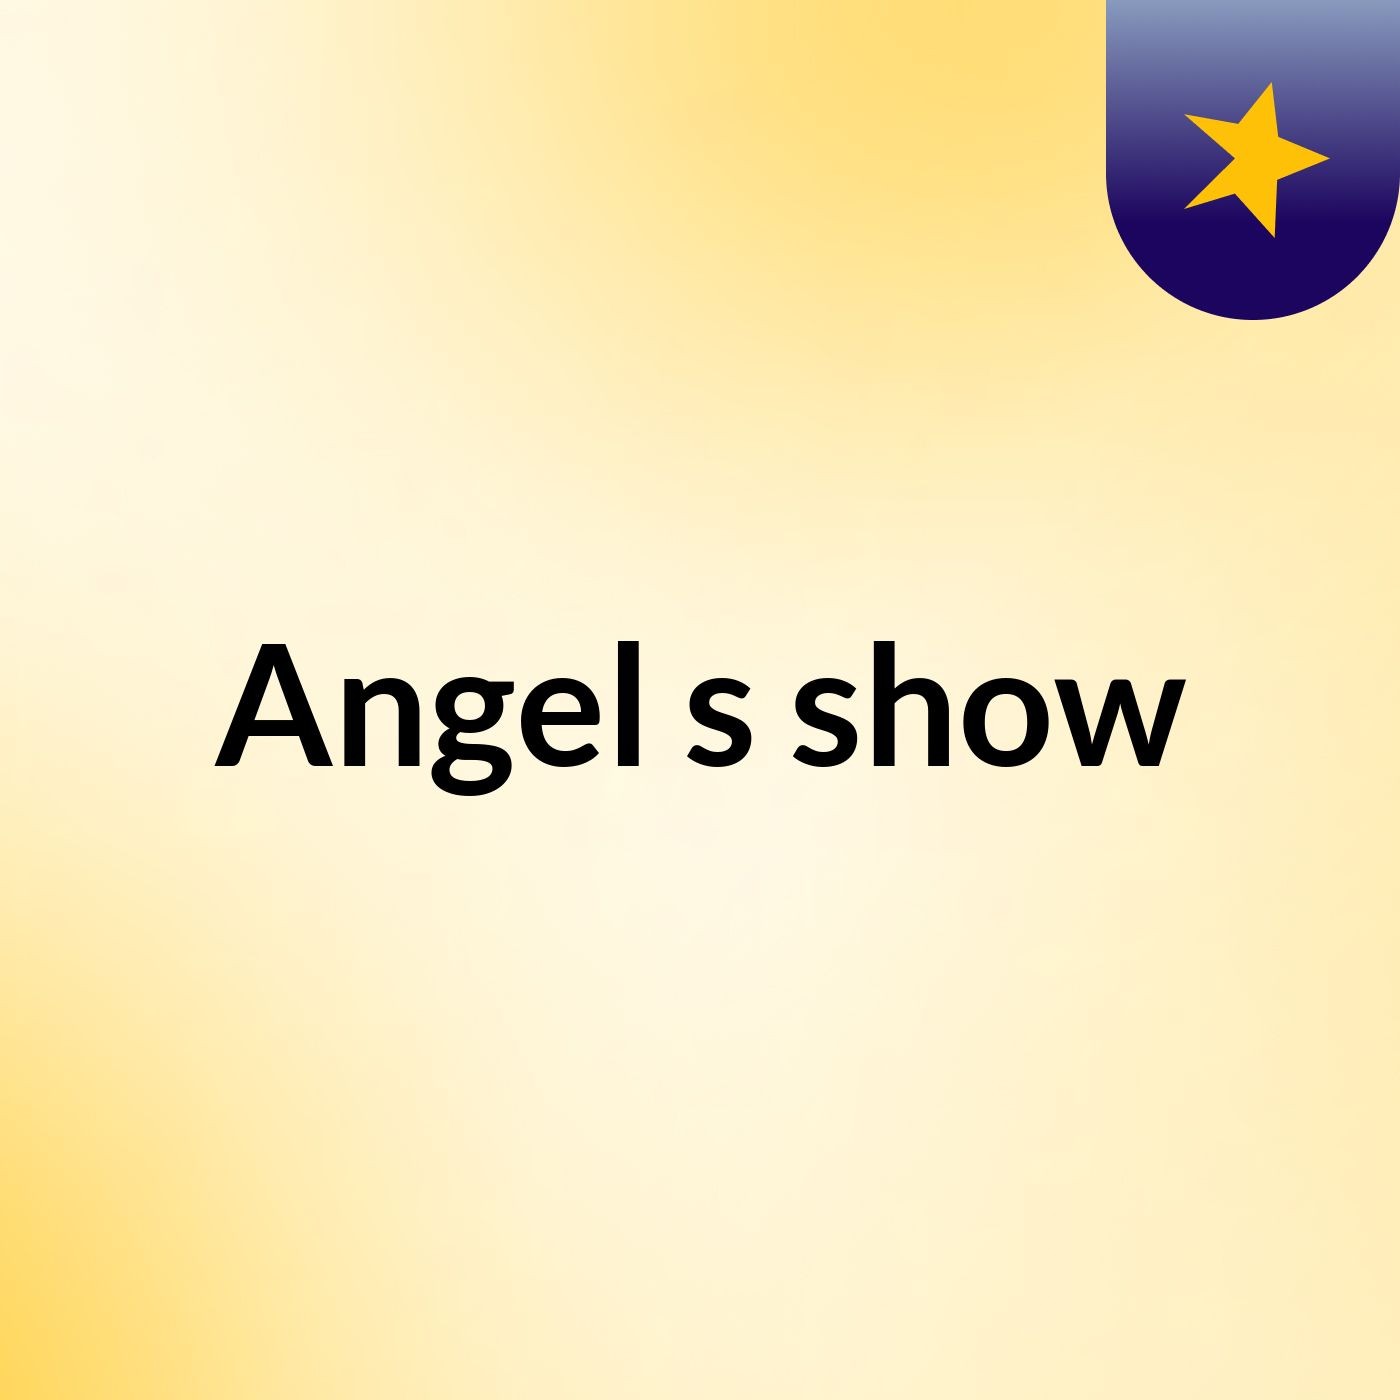 Episode 4 - Angel's show